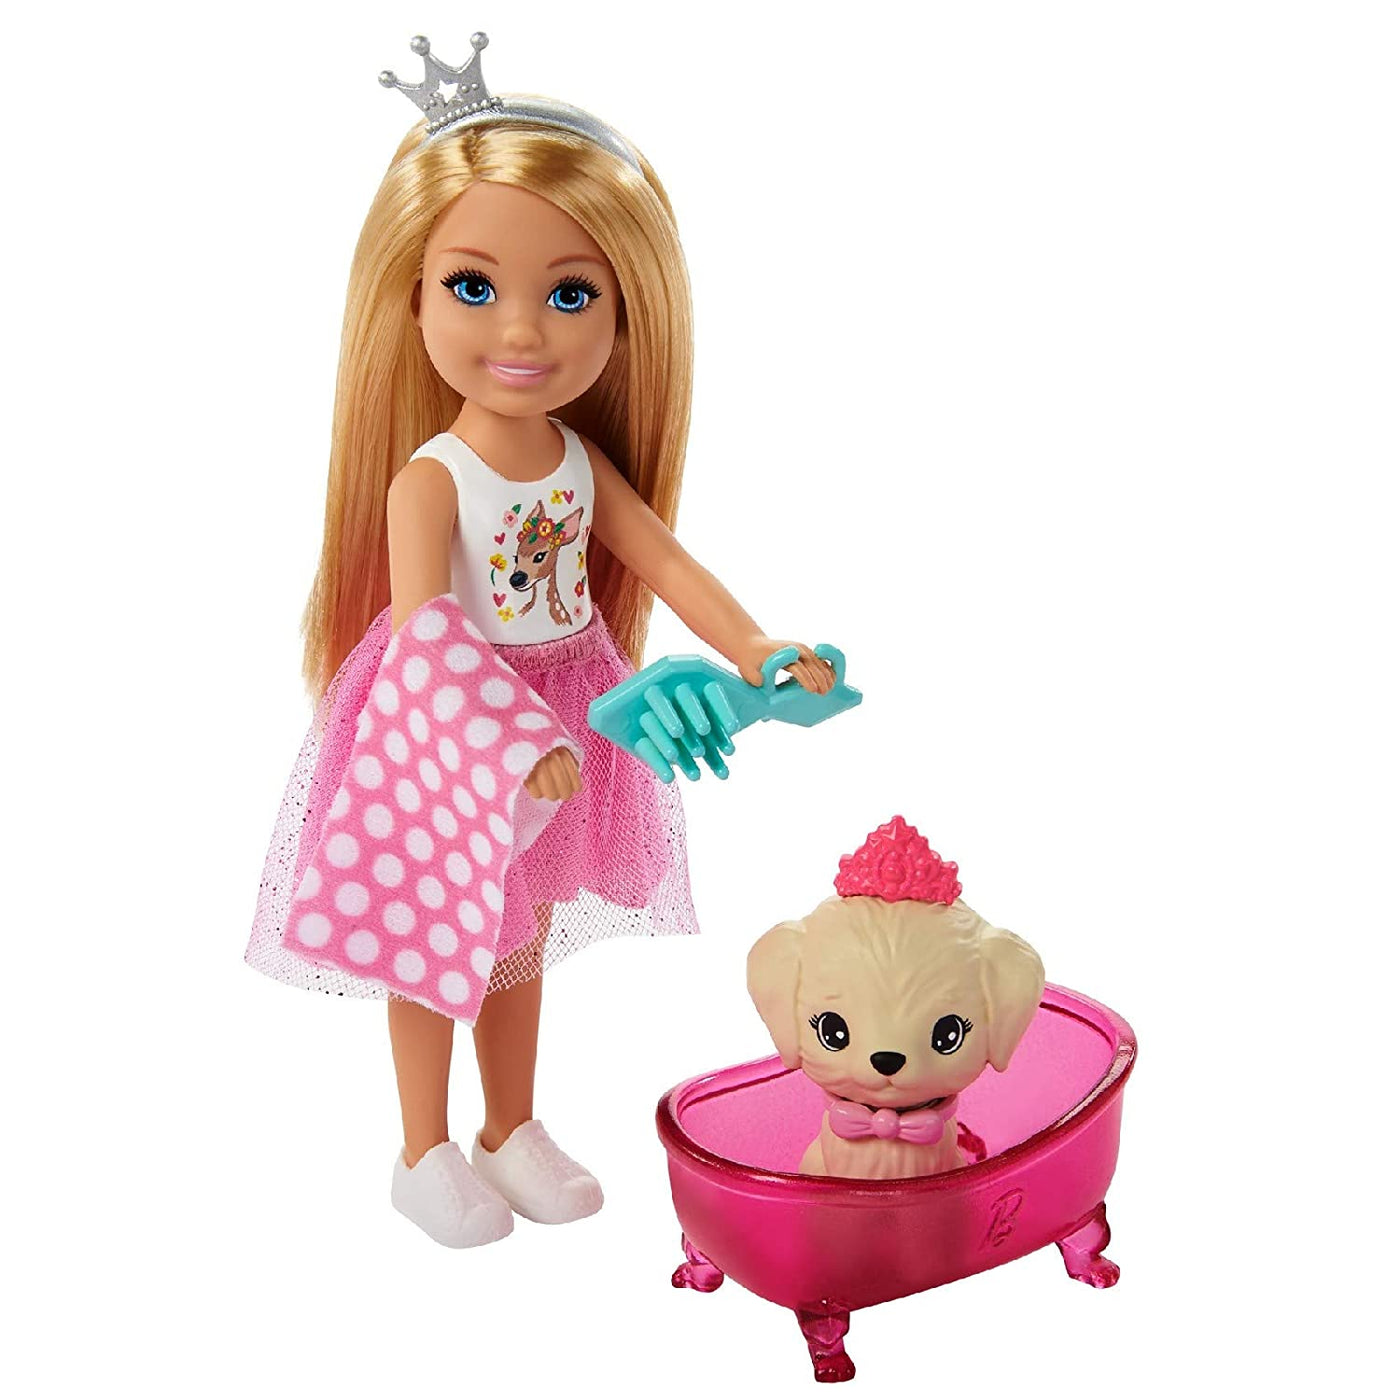 Princess Adventure Doll And Playset | Barbie